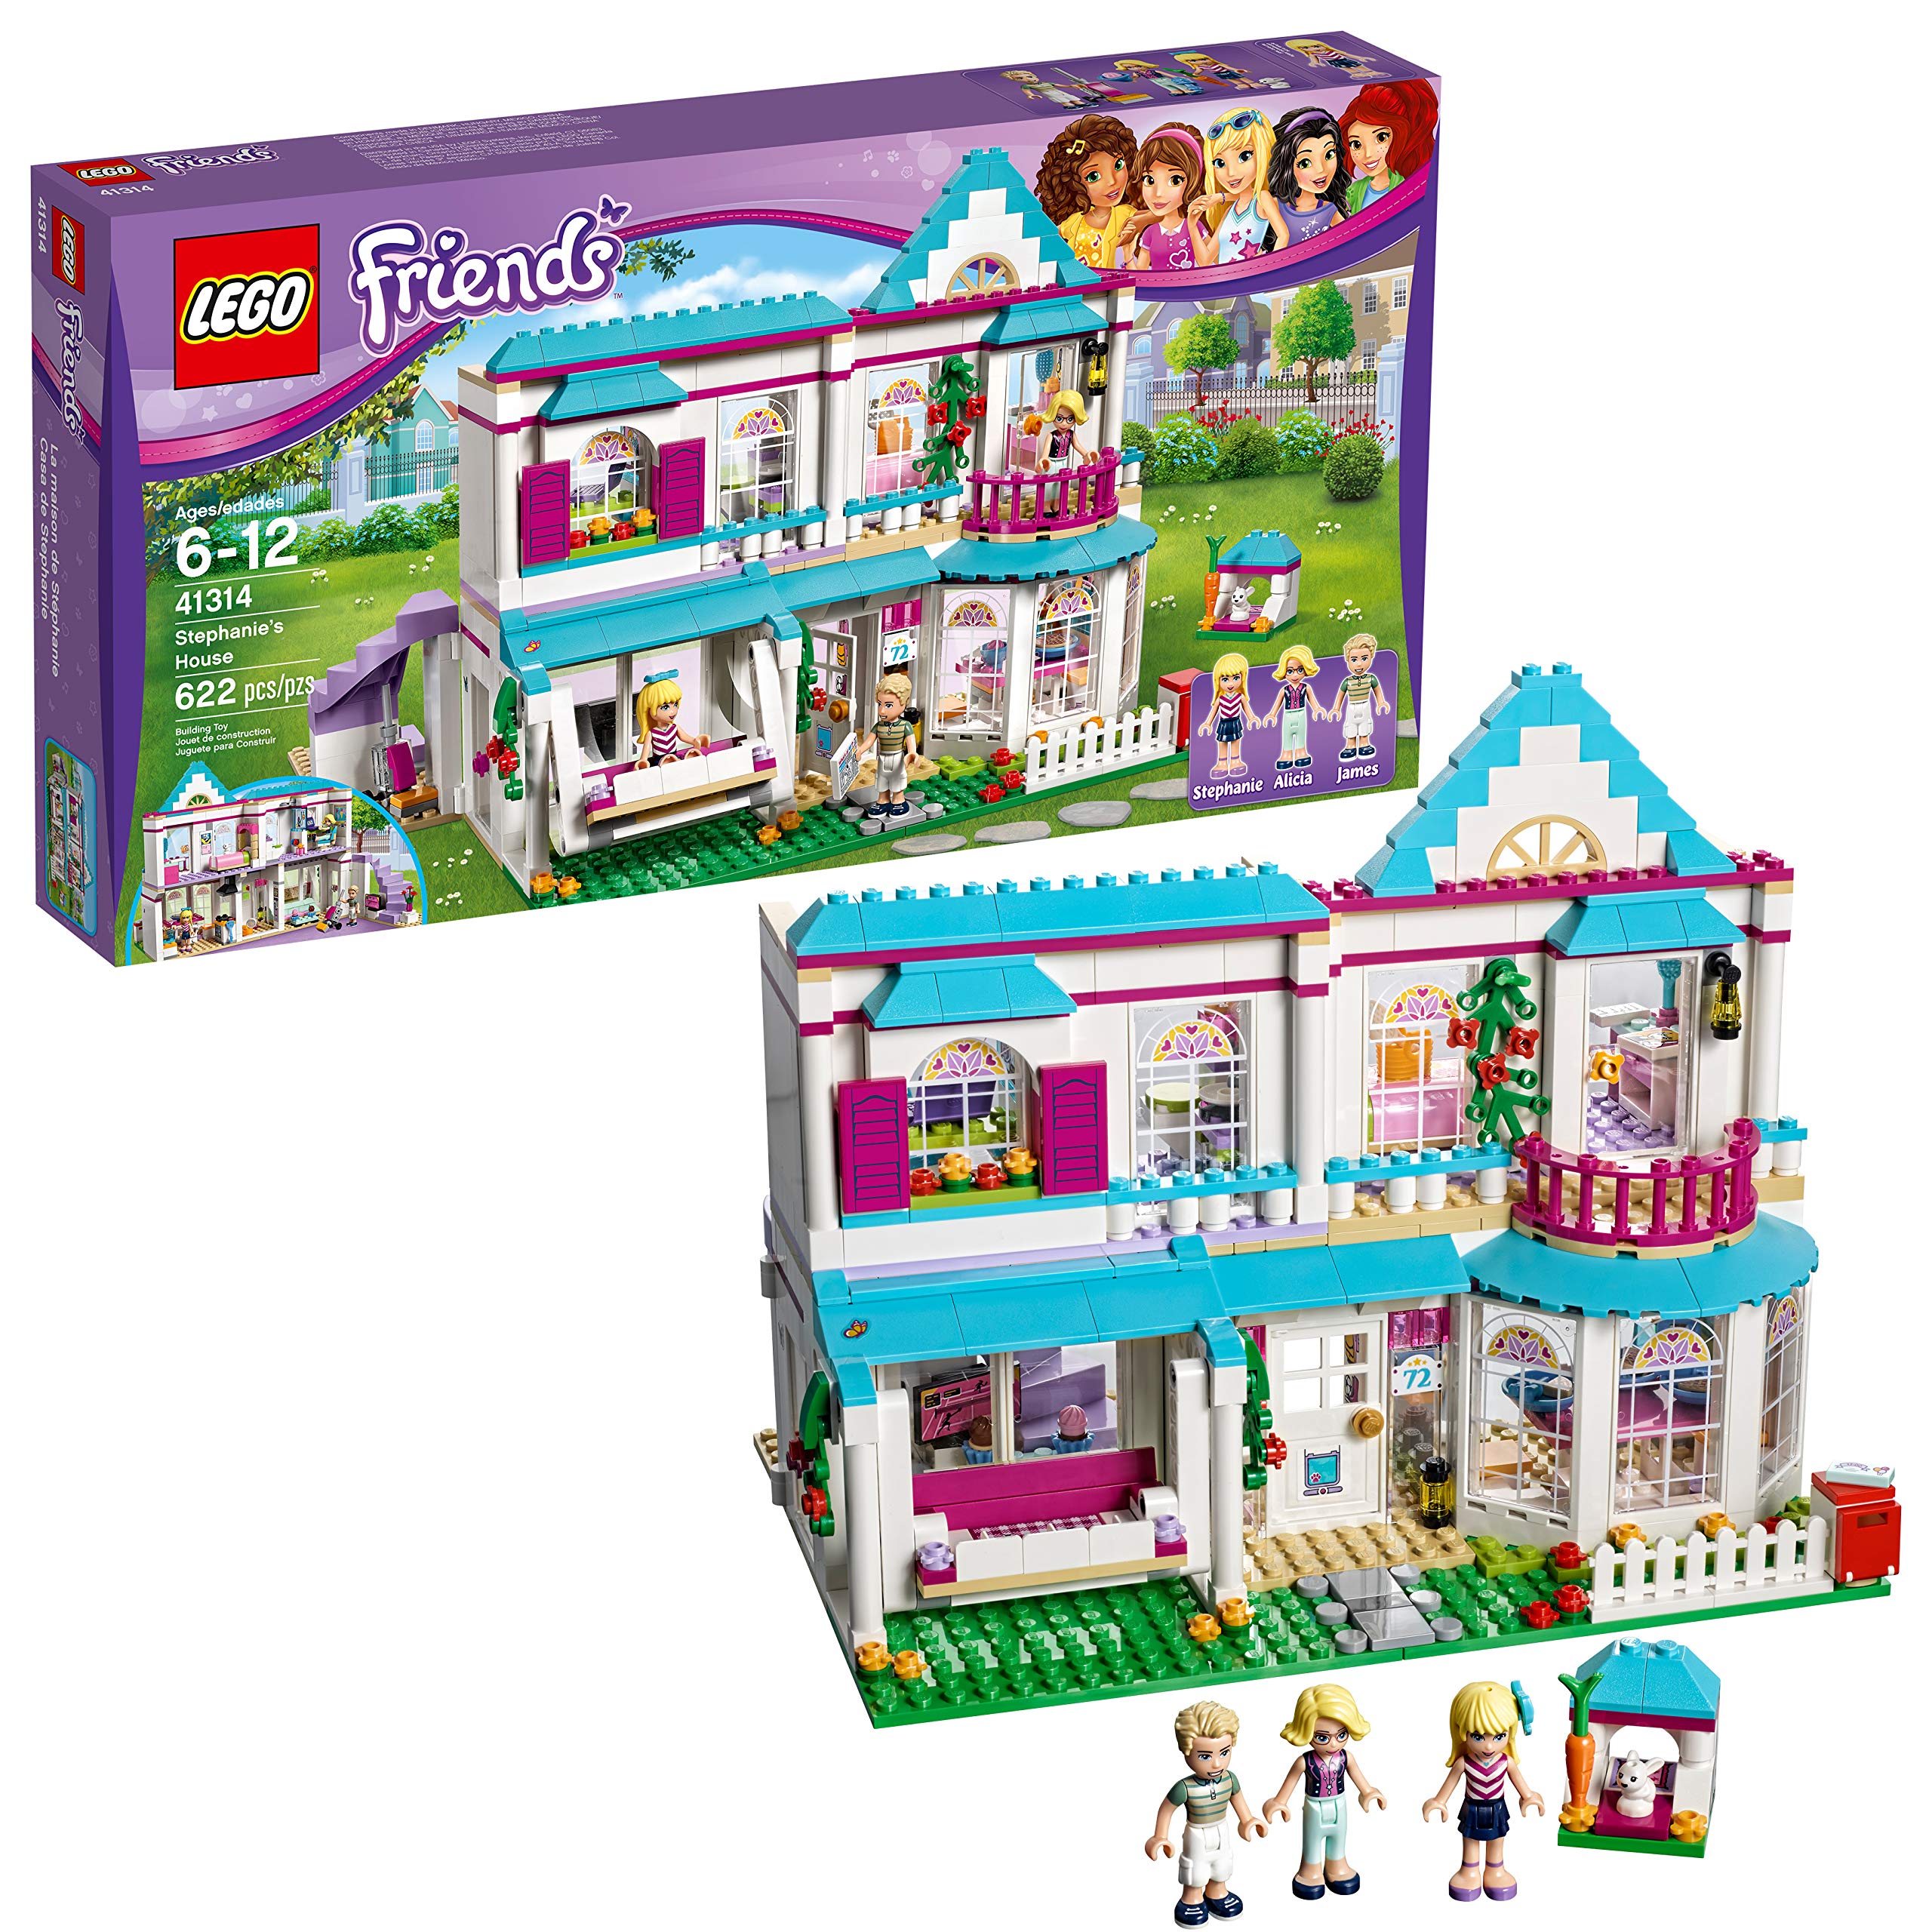 LEGO Friends Stephanie's House 41314 Build and Play Toy House with Mini Dolls, Dollhouse Kit (622 Pieces)